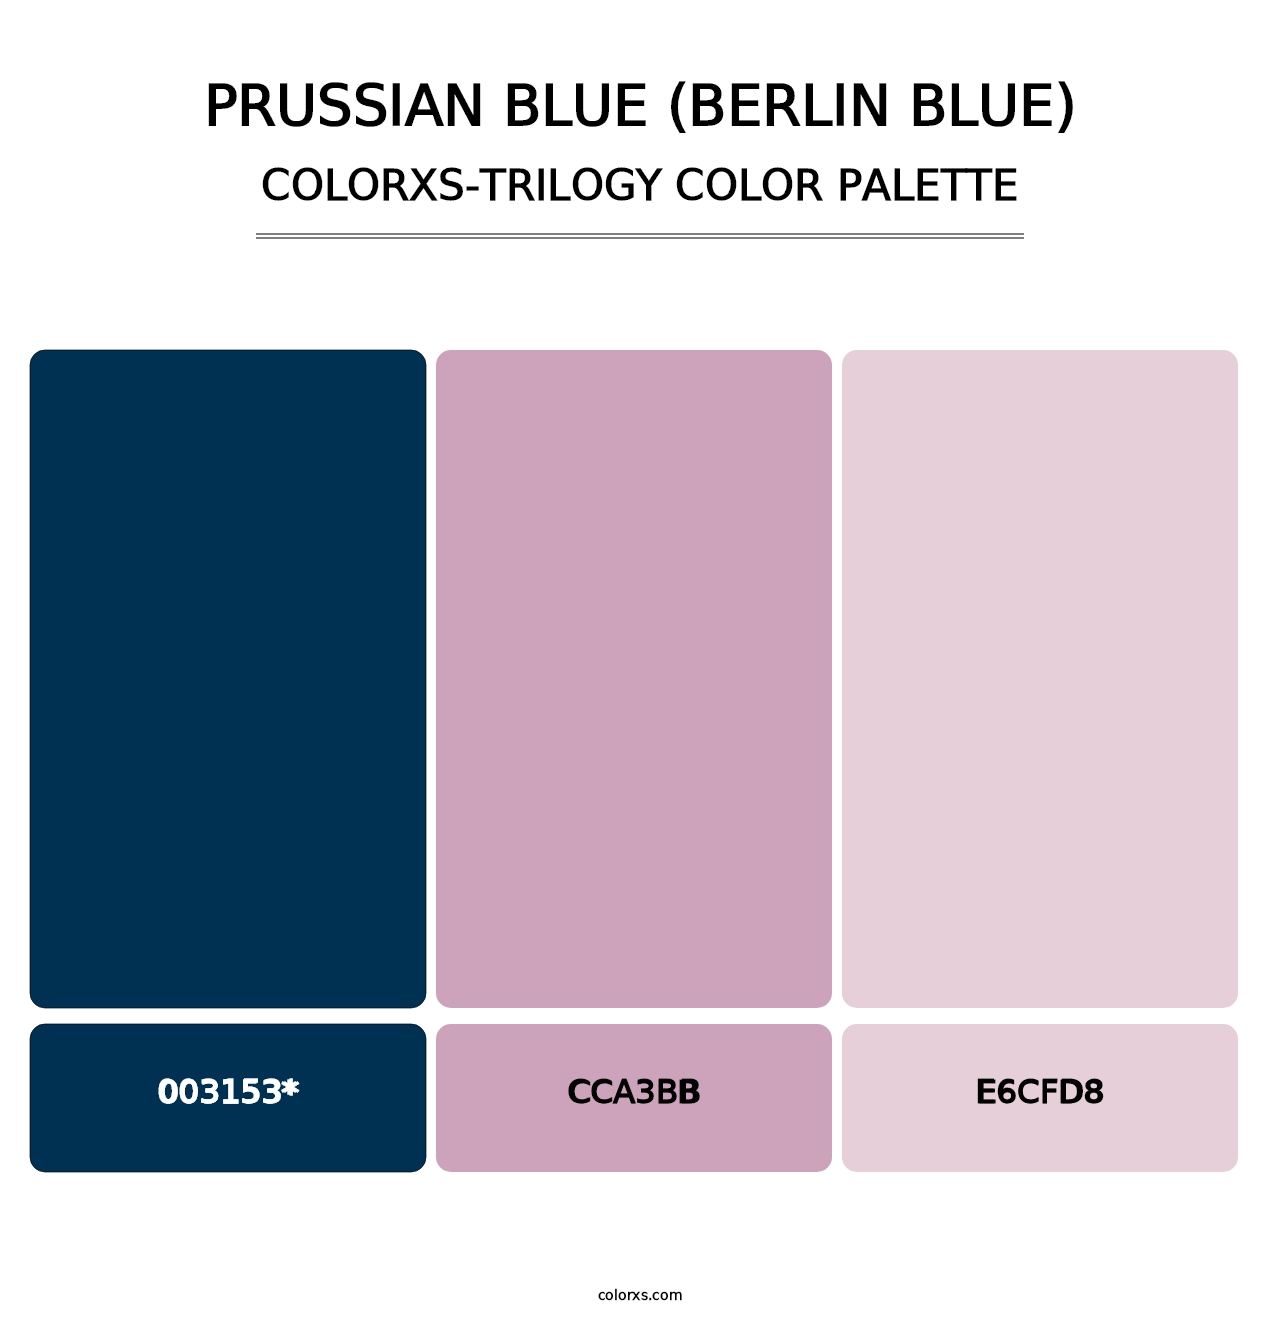 Prussian Blue (Berlin Blue) - Colorxs Trilogy Palette